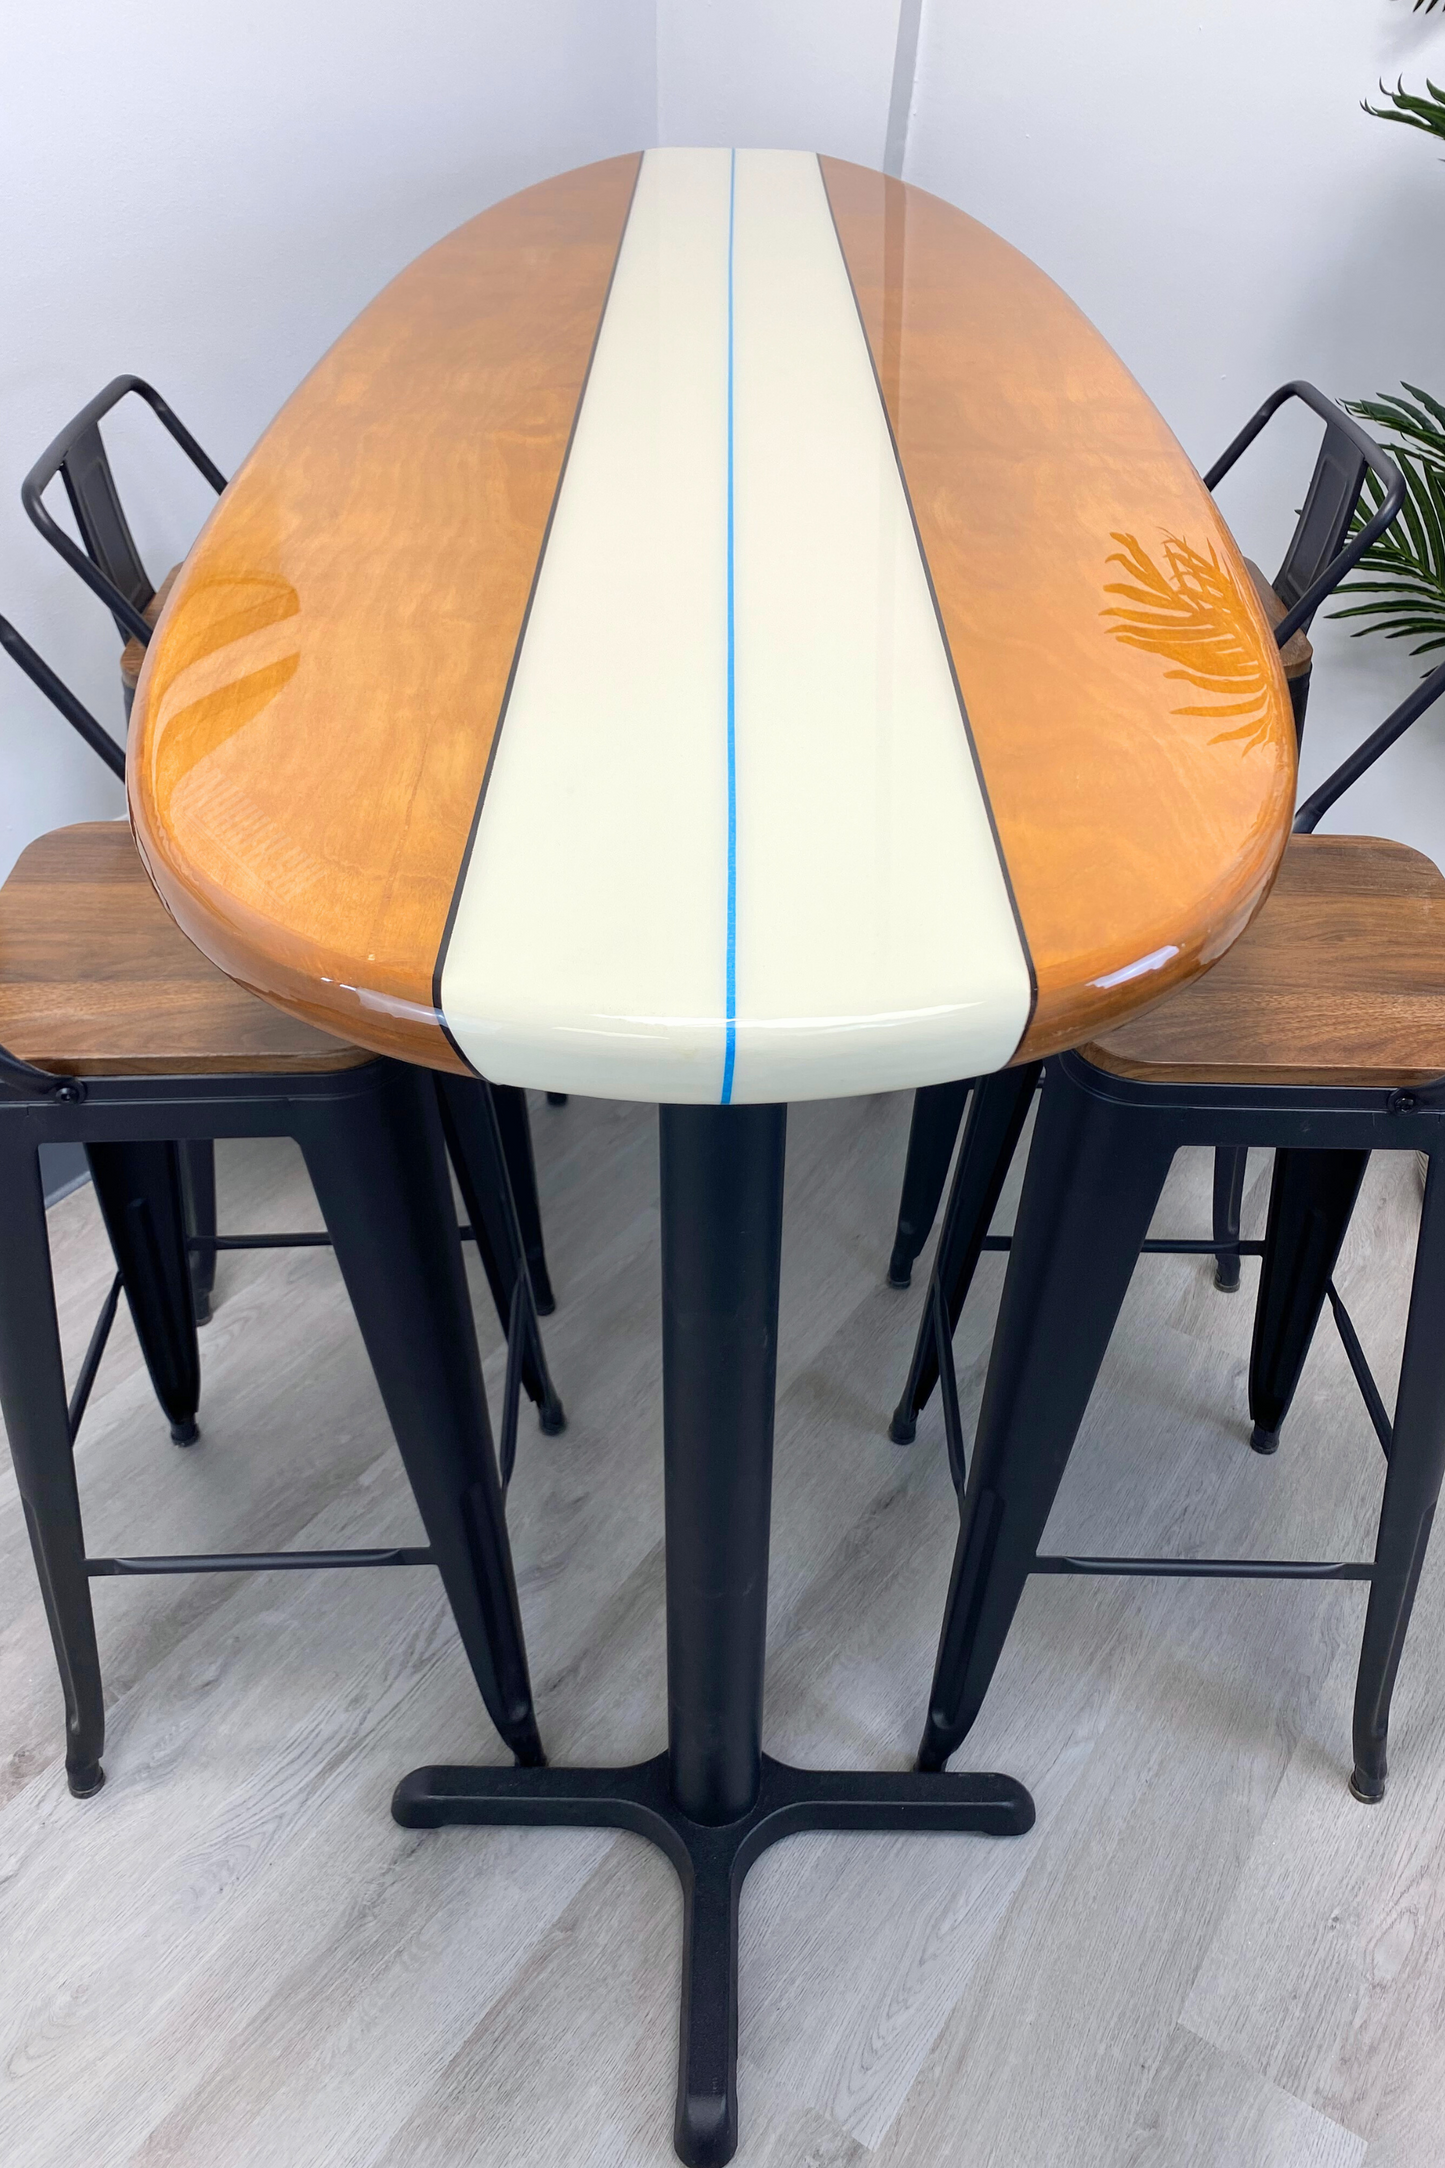 The Padillac Surfboard Bar Top